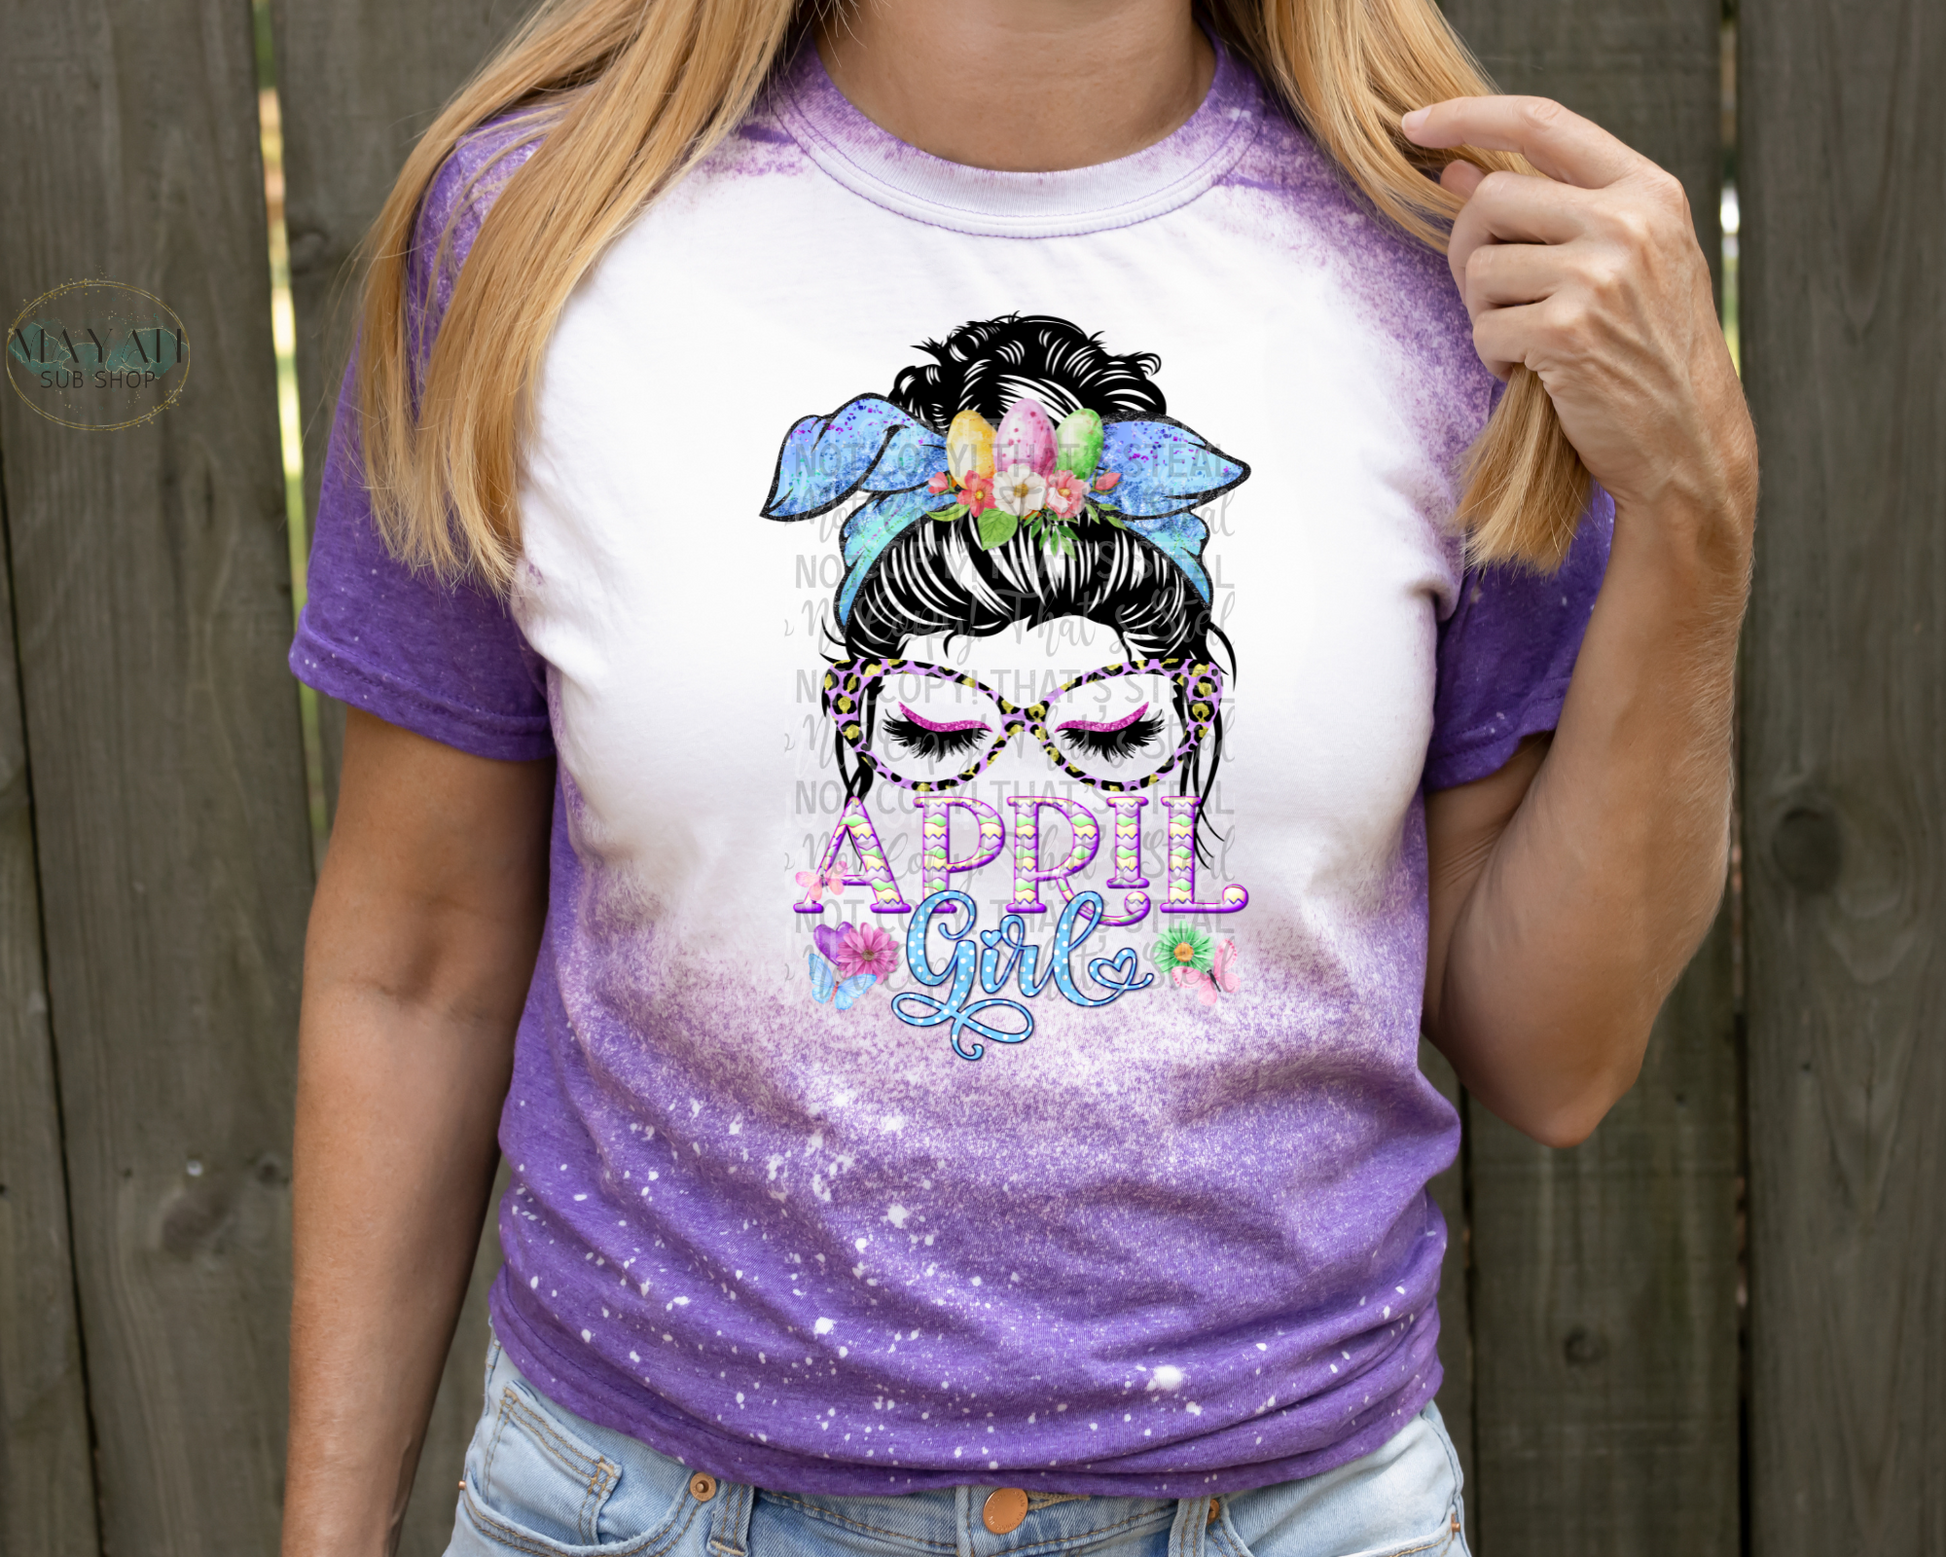 April Girl Messy Bun Bleached Shirt - Mayan Sub Shop